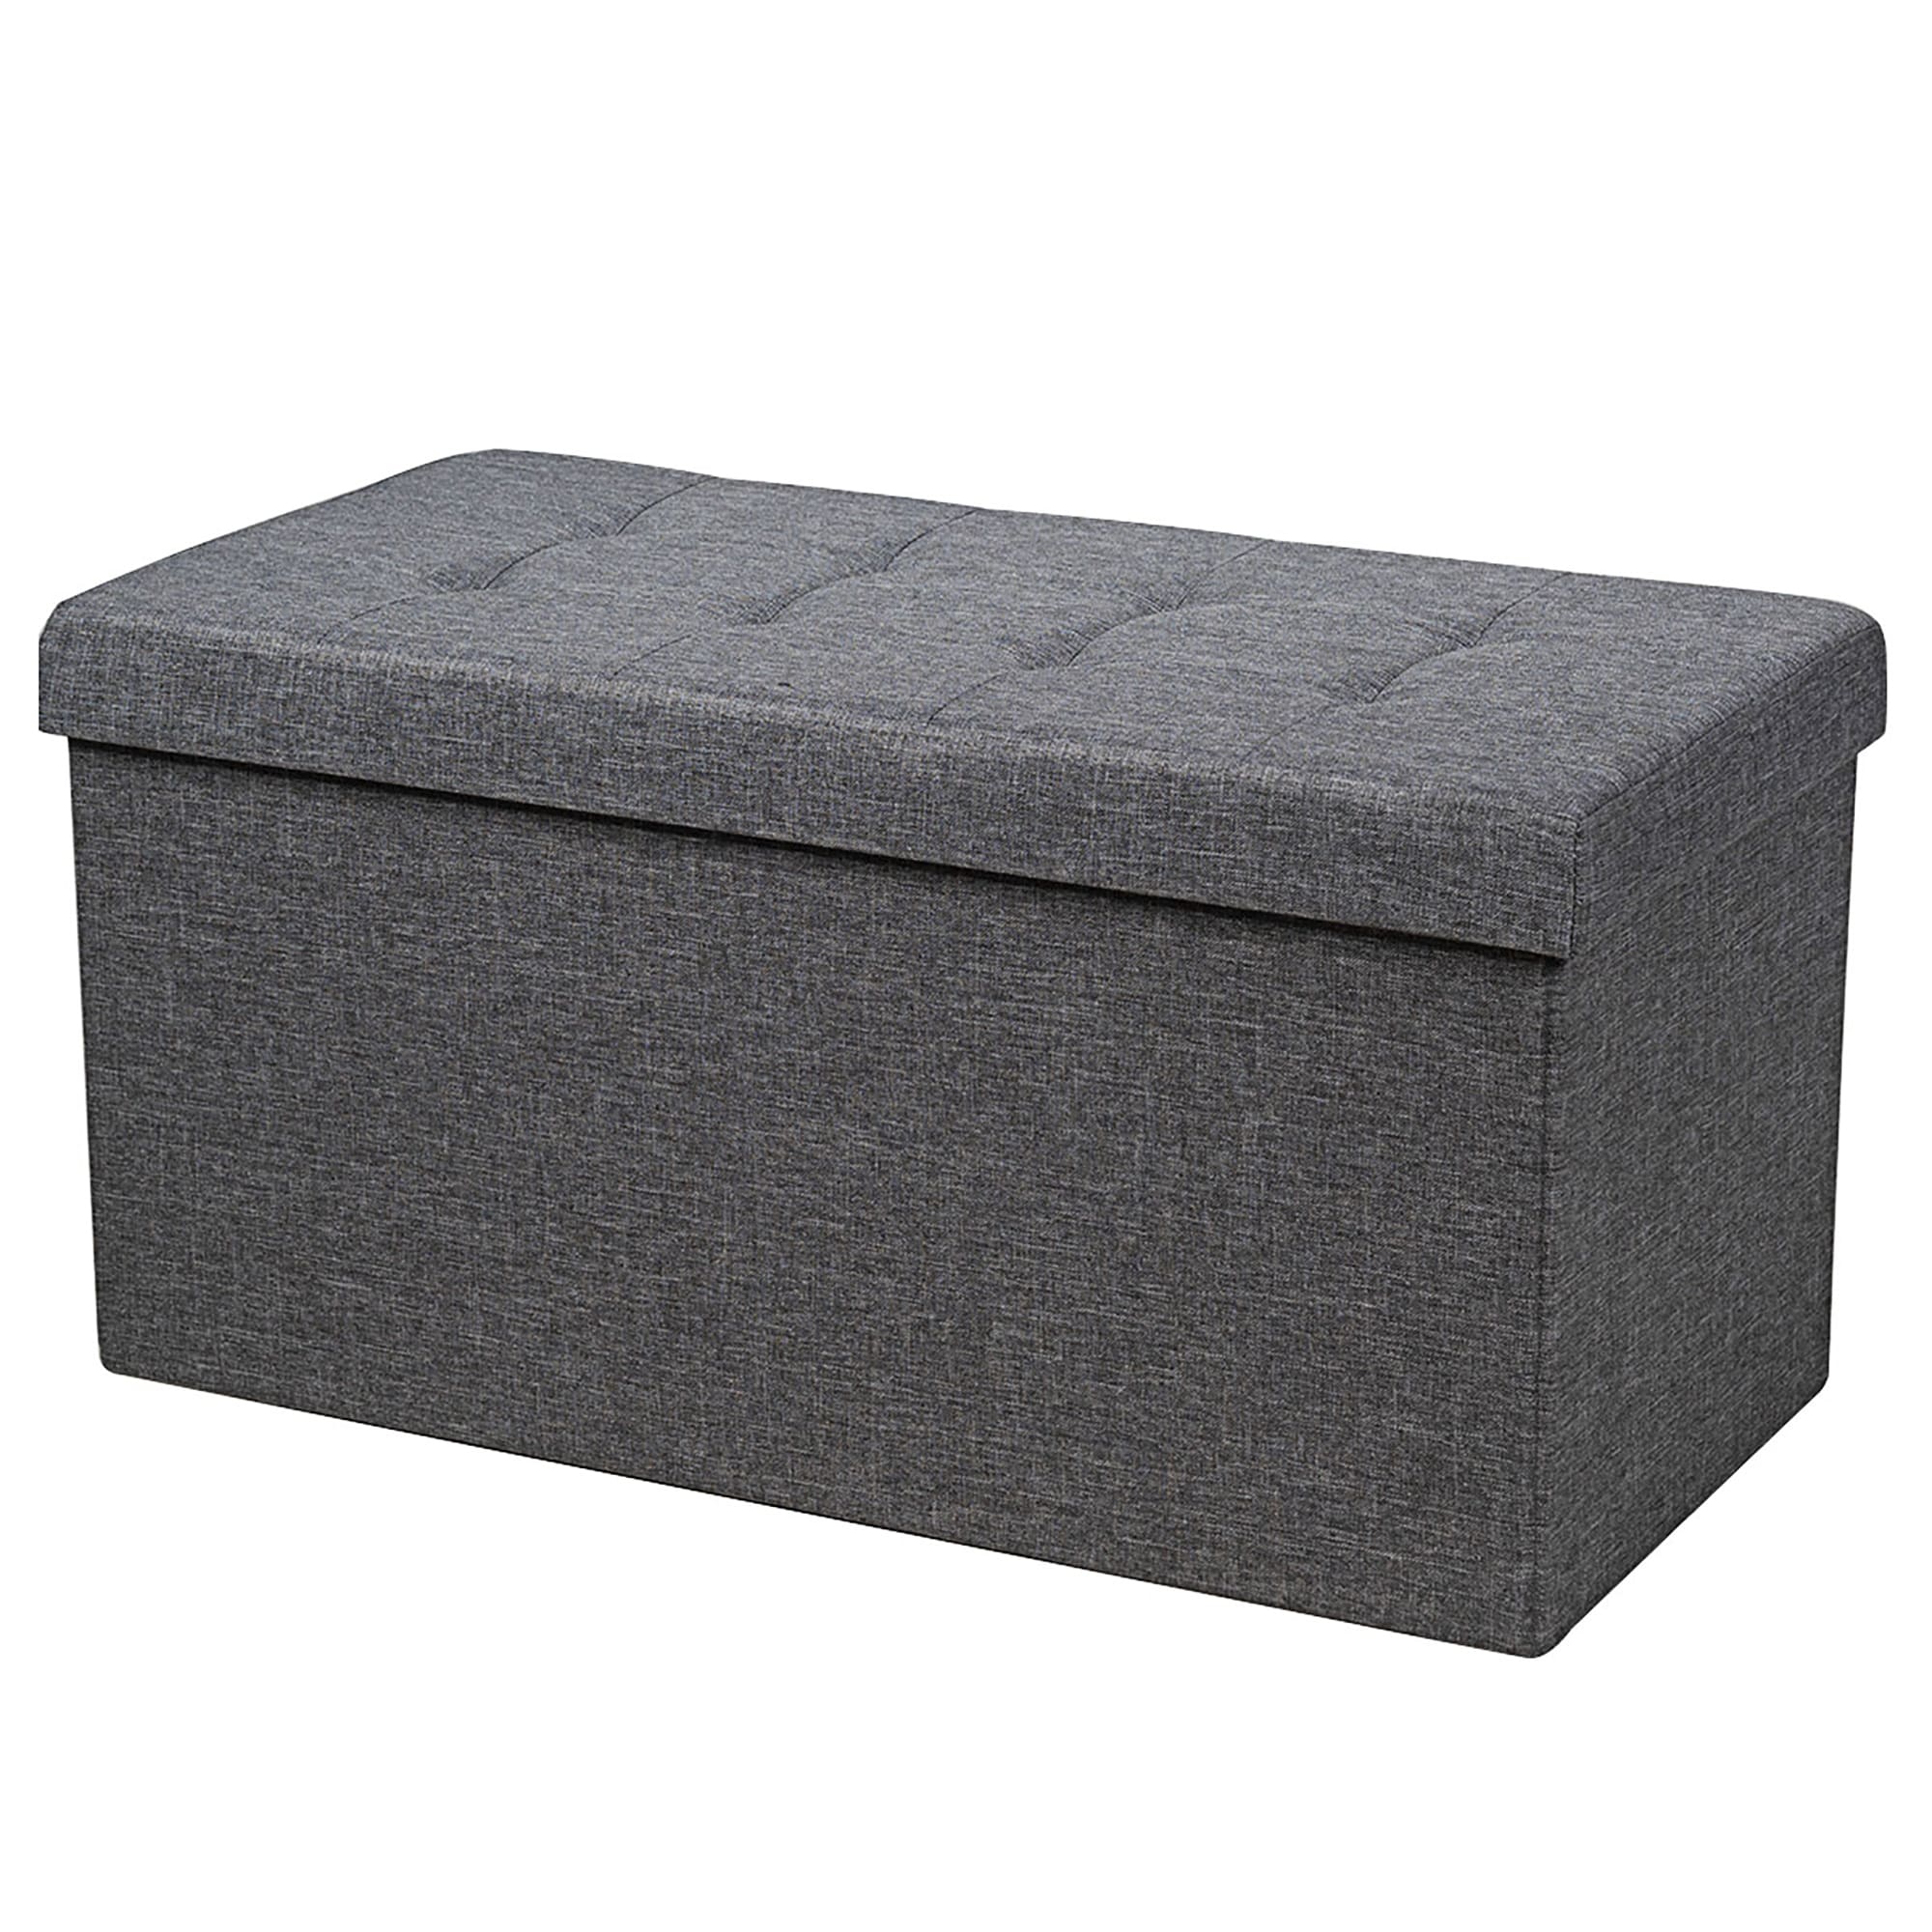 black toy chest storage bench